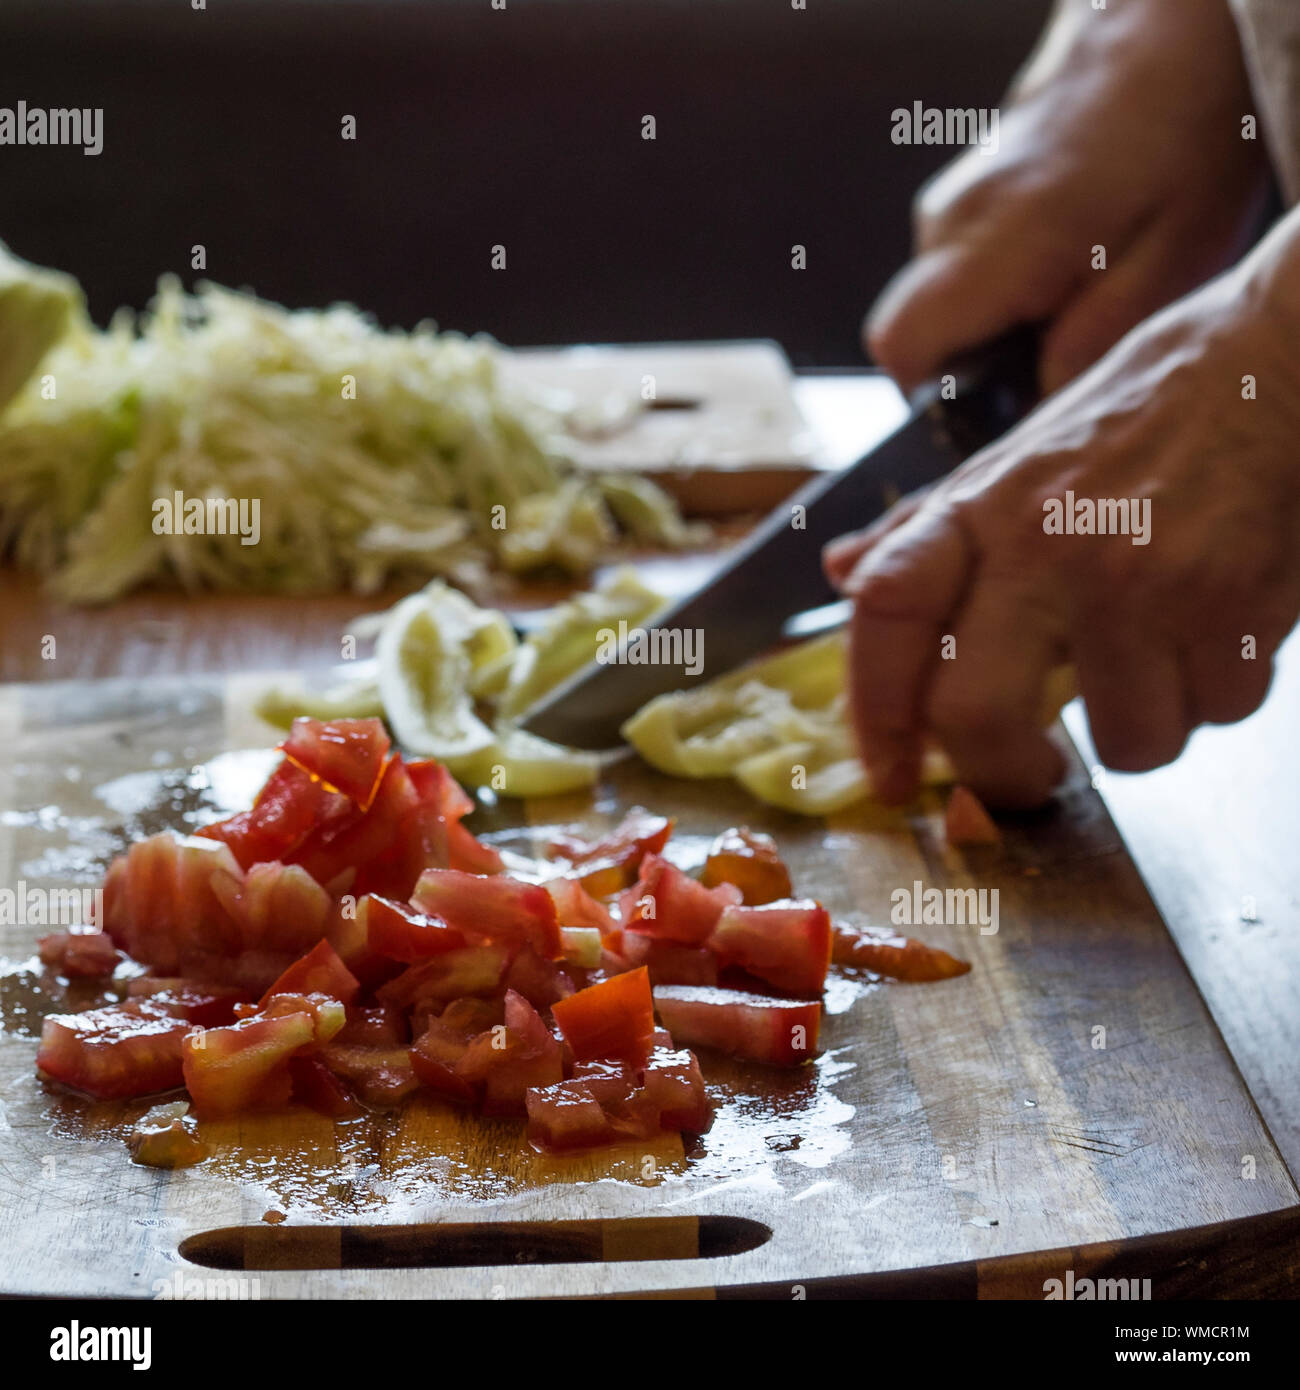 Human Hand Slicing Vegetables Stock Photo